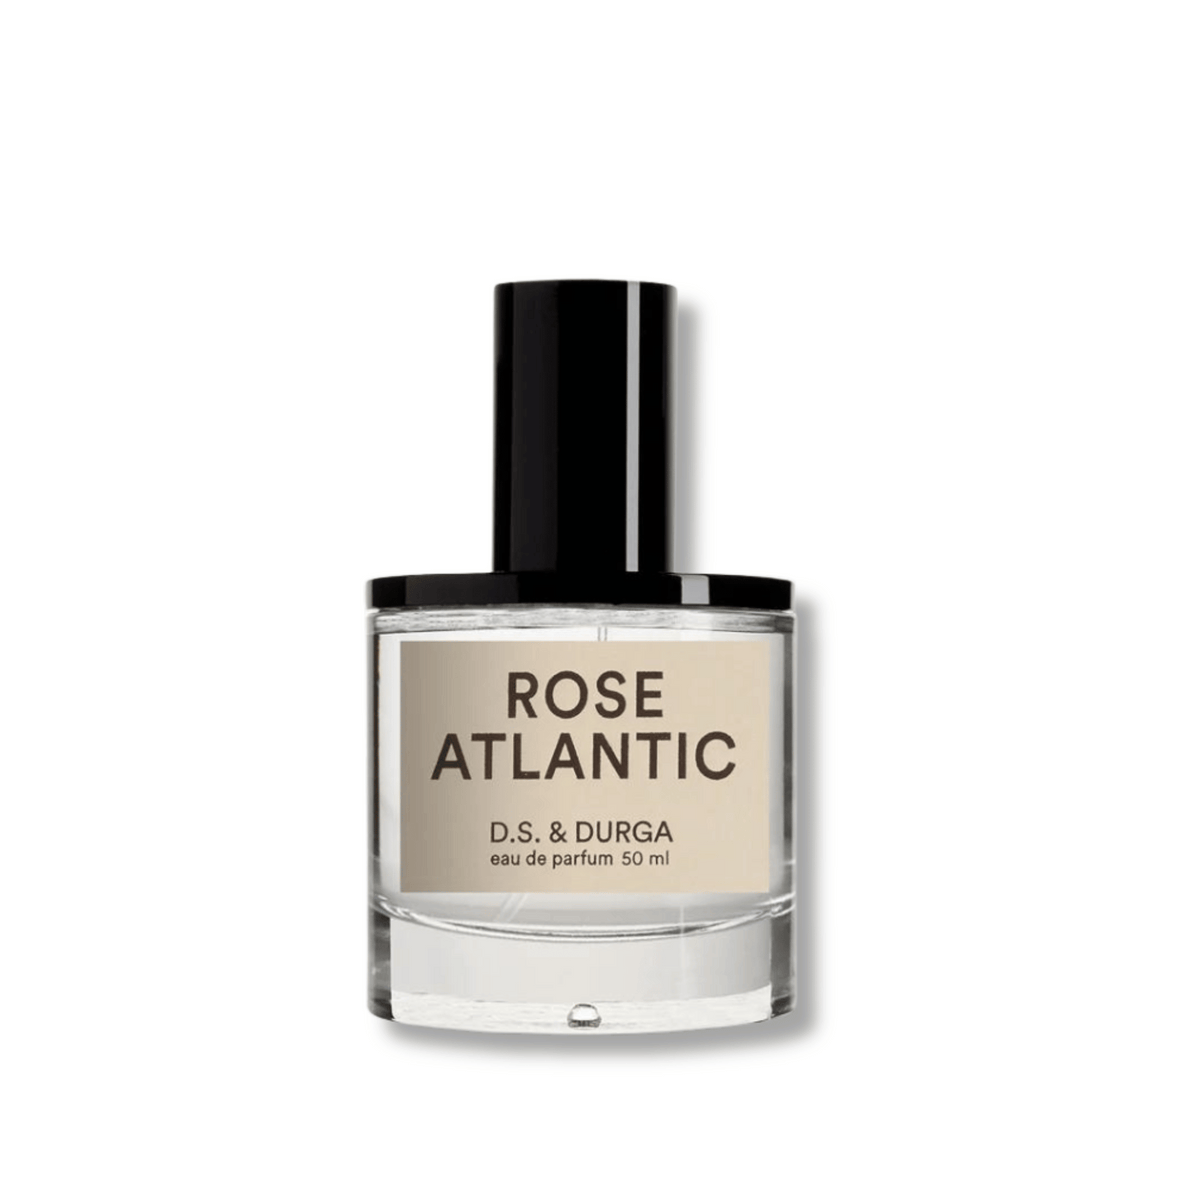 Primary Image of Rose Atlantic Eau de Parfum